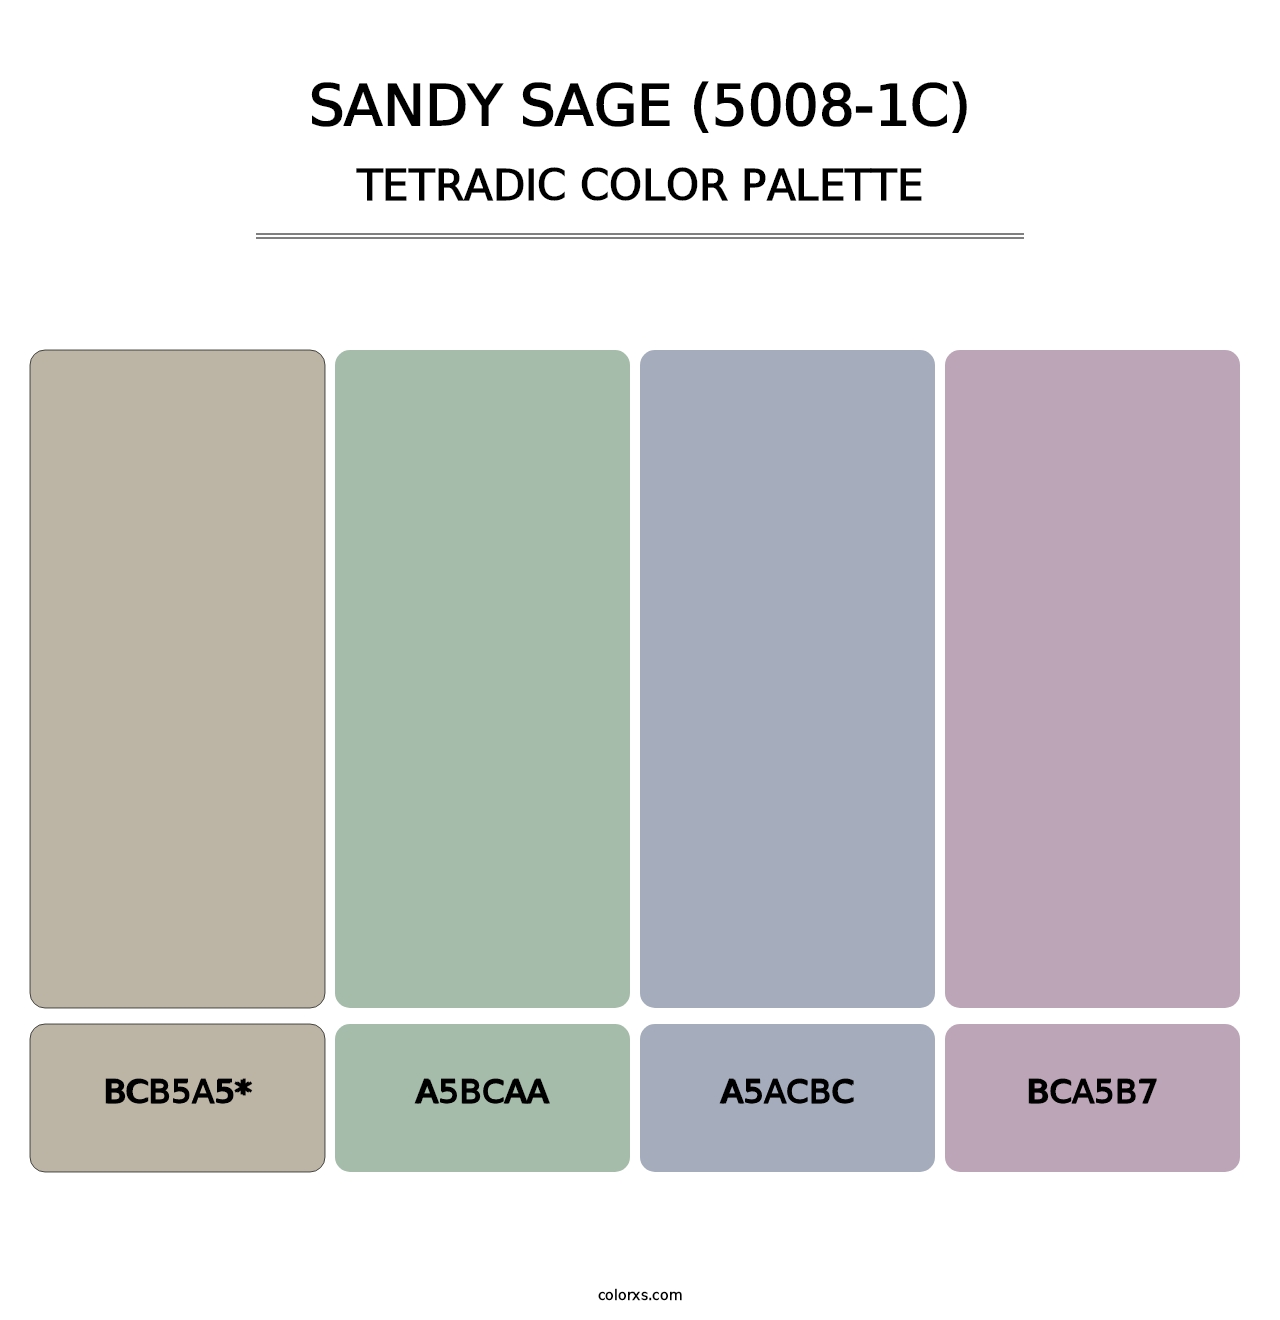 Sandy Sage (5008-1C) - Tetradic Color Palette